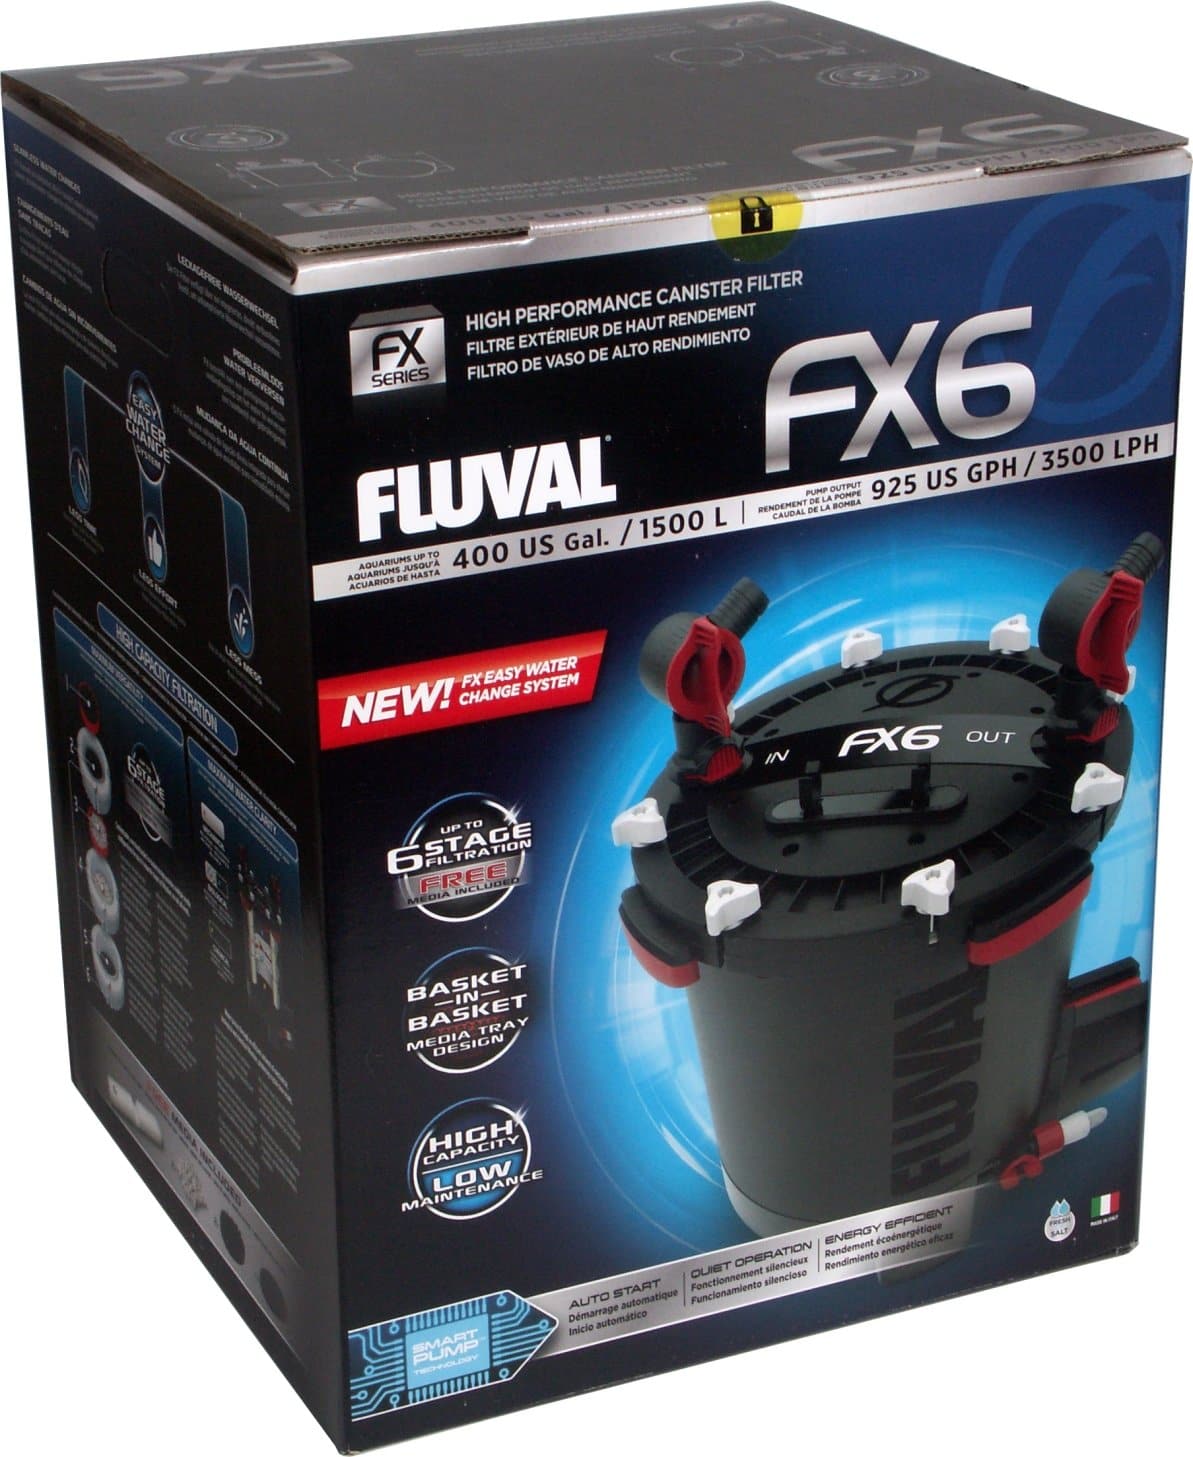 Fluval FX6 External Filter £281.99 Tropical Supplies North East